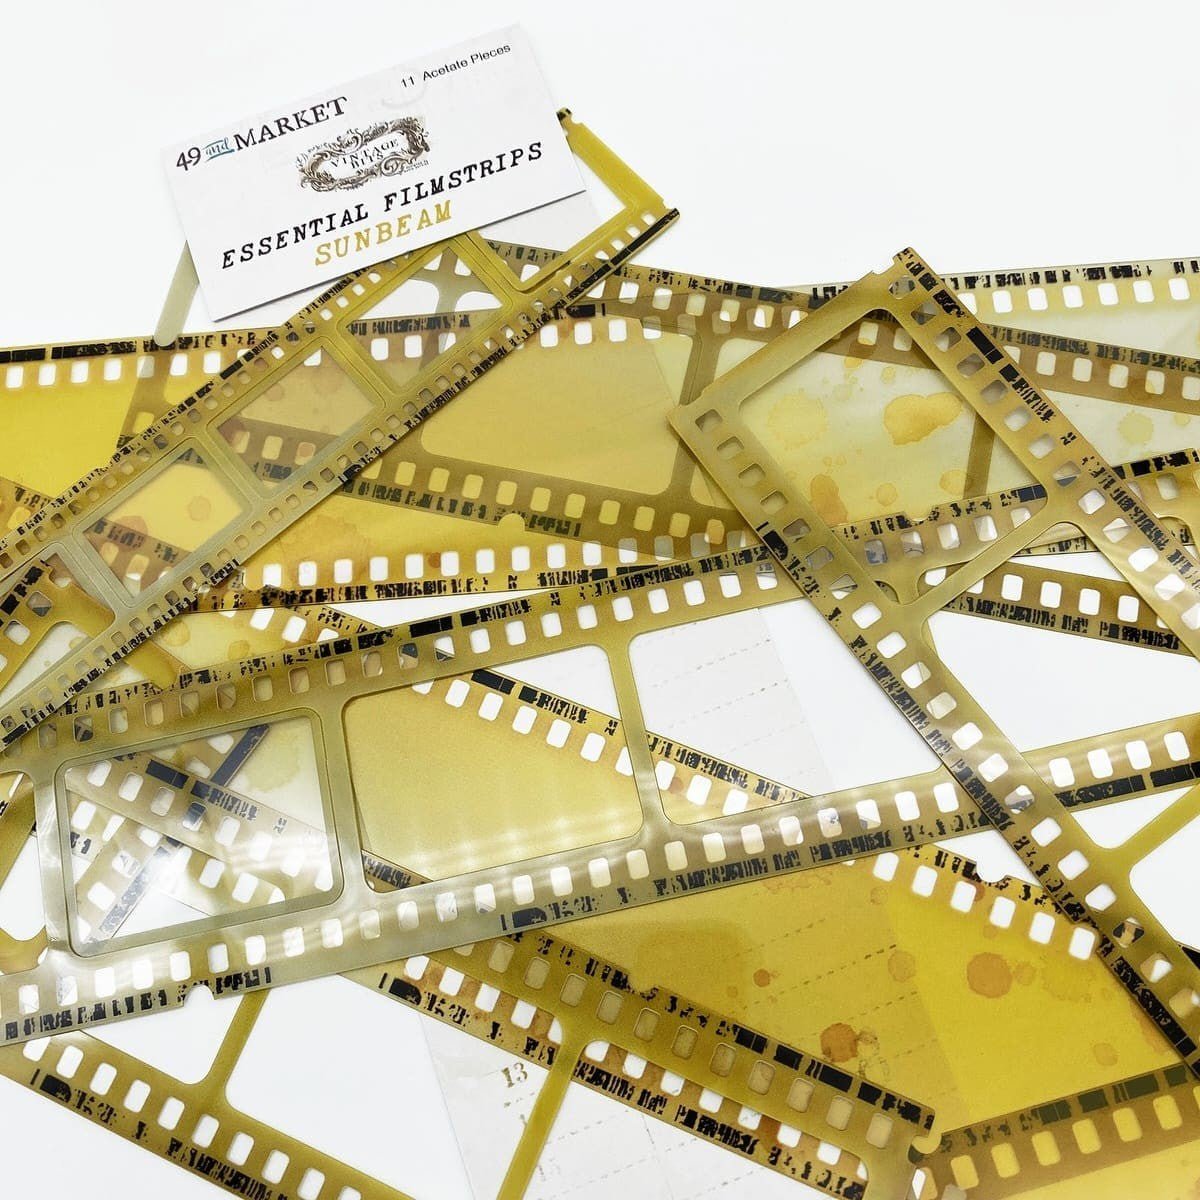 Essential filmstrips - Sunbeam - 49 and Market - Tidformera